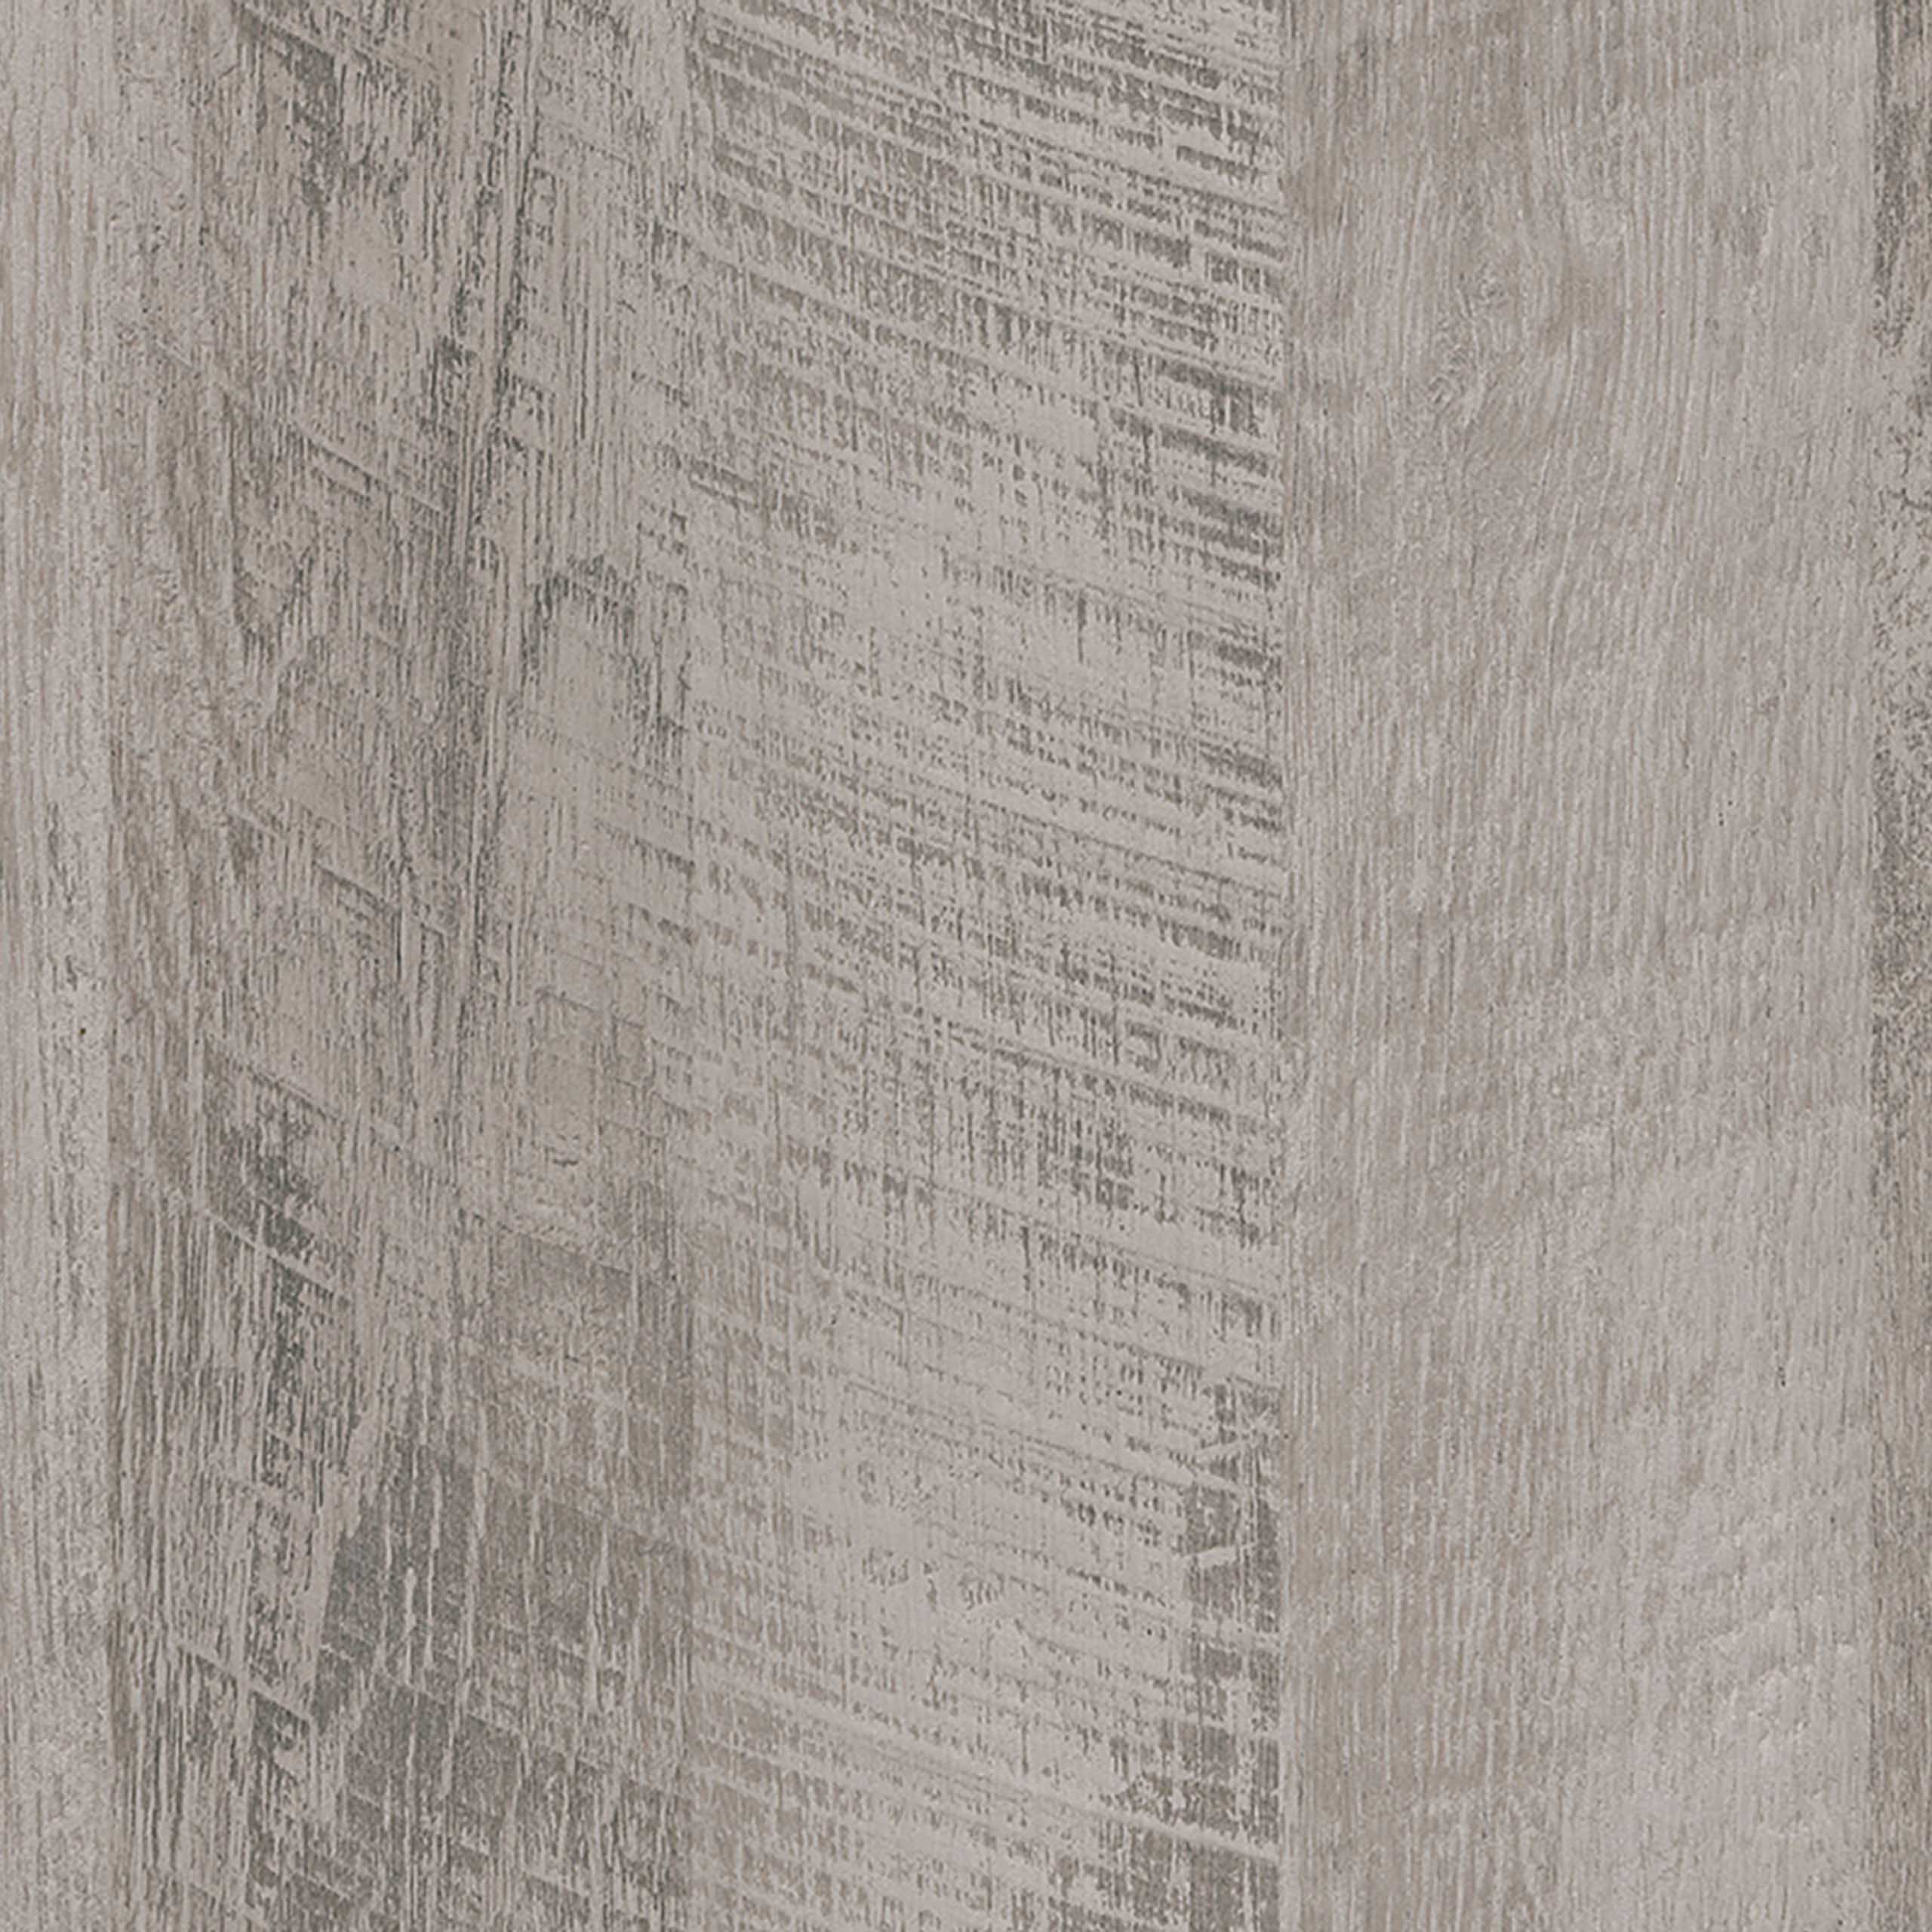 G6 Light grey wood